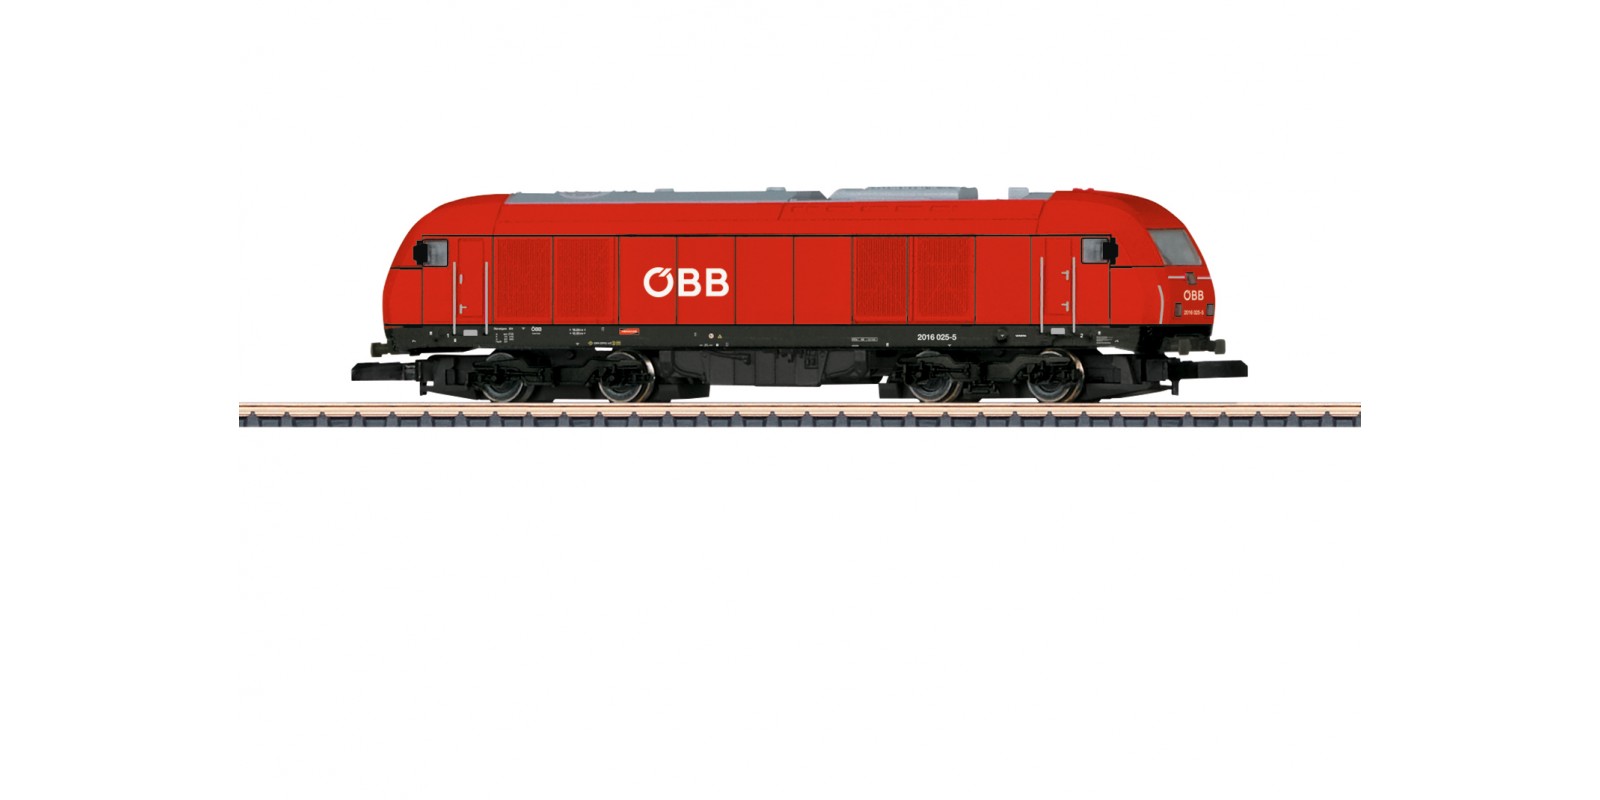 88880 Class 2016 Diesel Locomotive